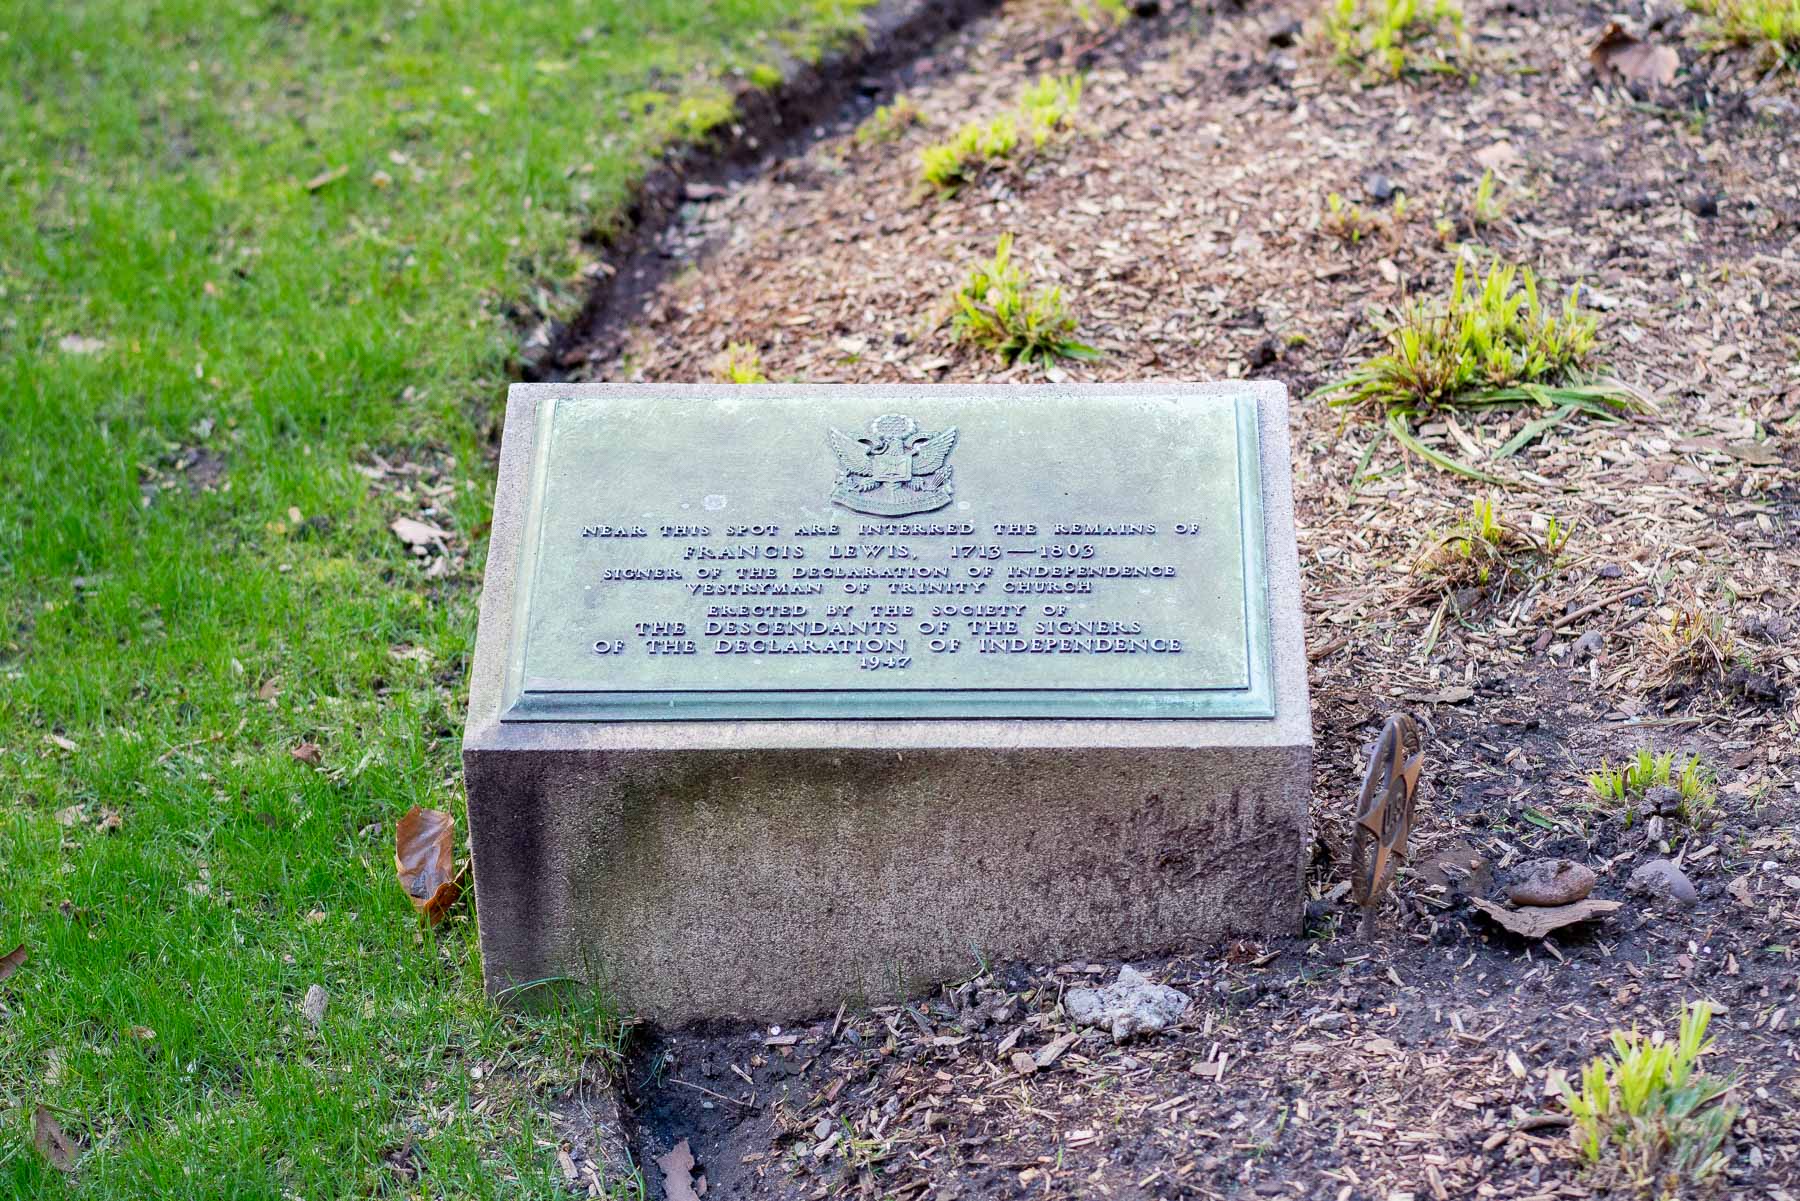 Francis Lewis's tombstone in Trinity Church's Cemetery near Alexander Hamilton's Grave 